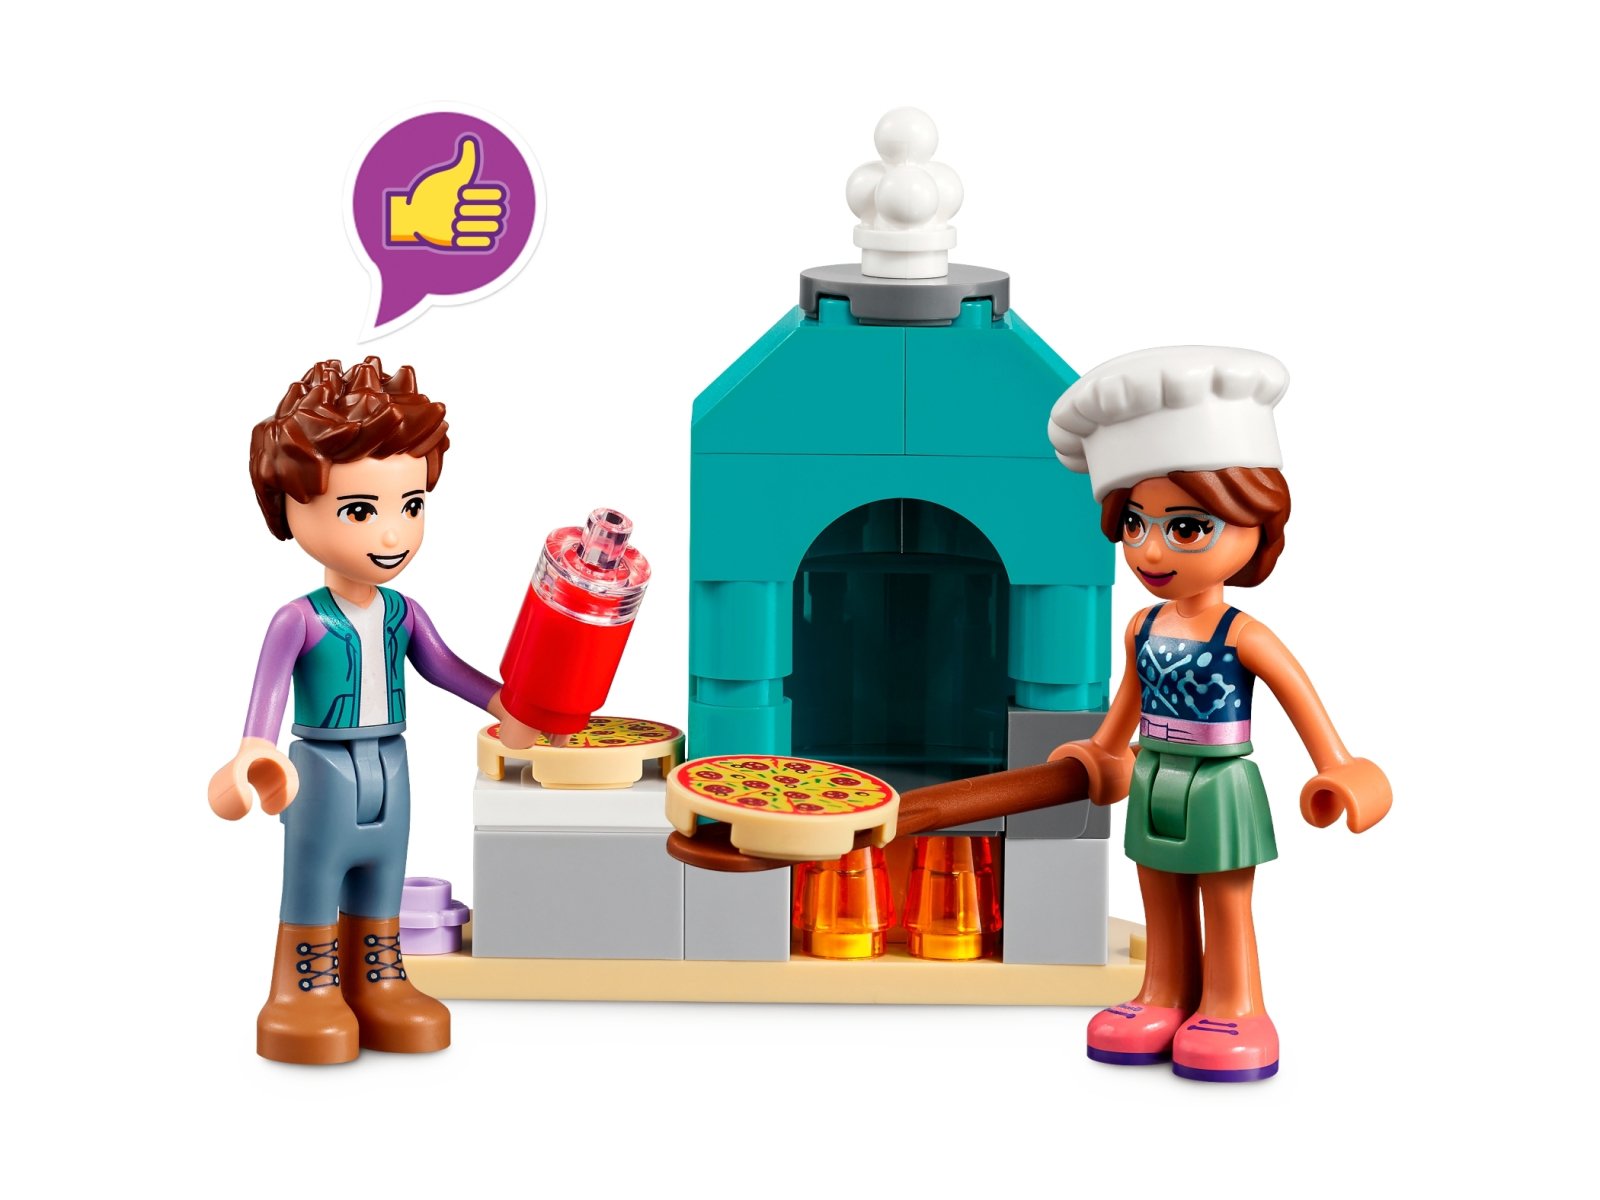 LEGO Friends 41705 Pizzeria w Heartlake